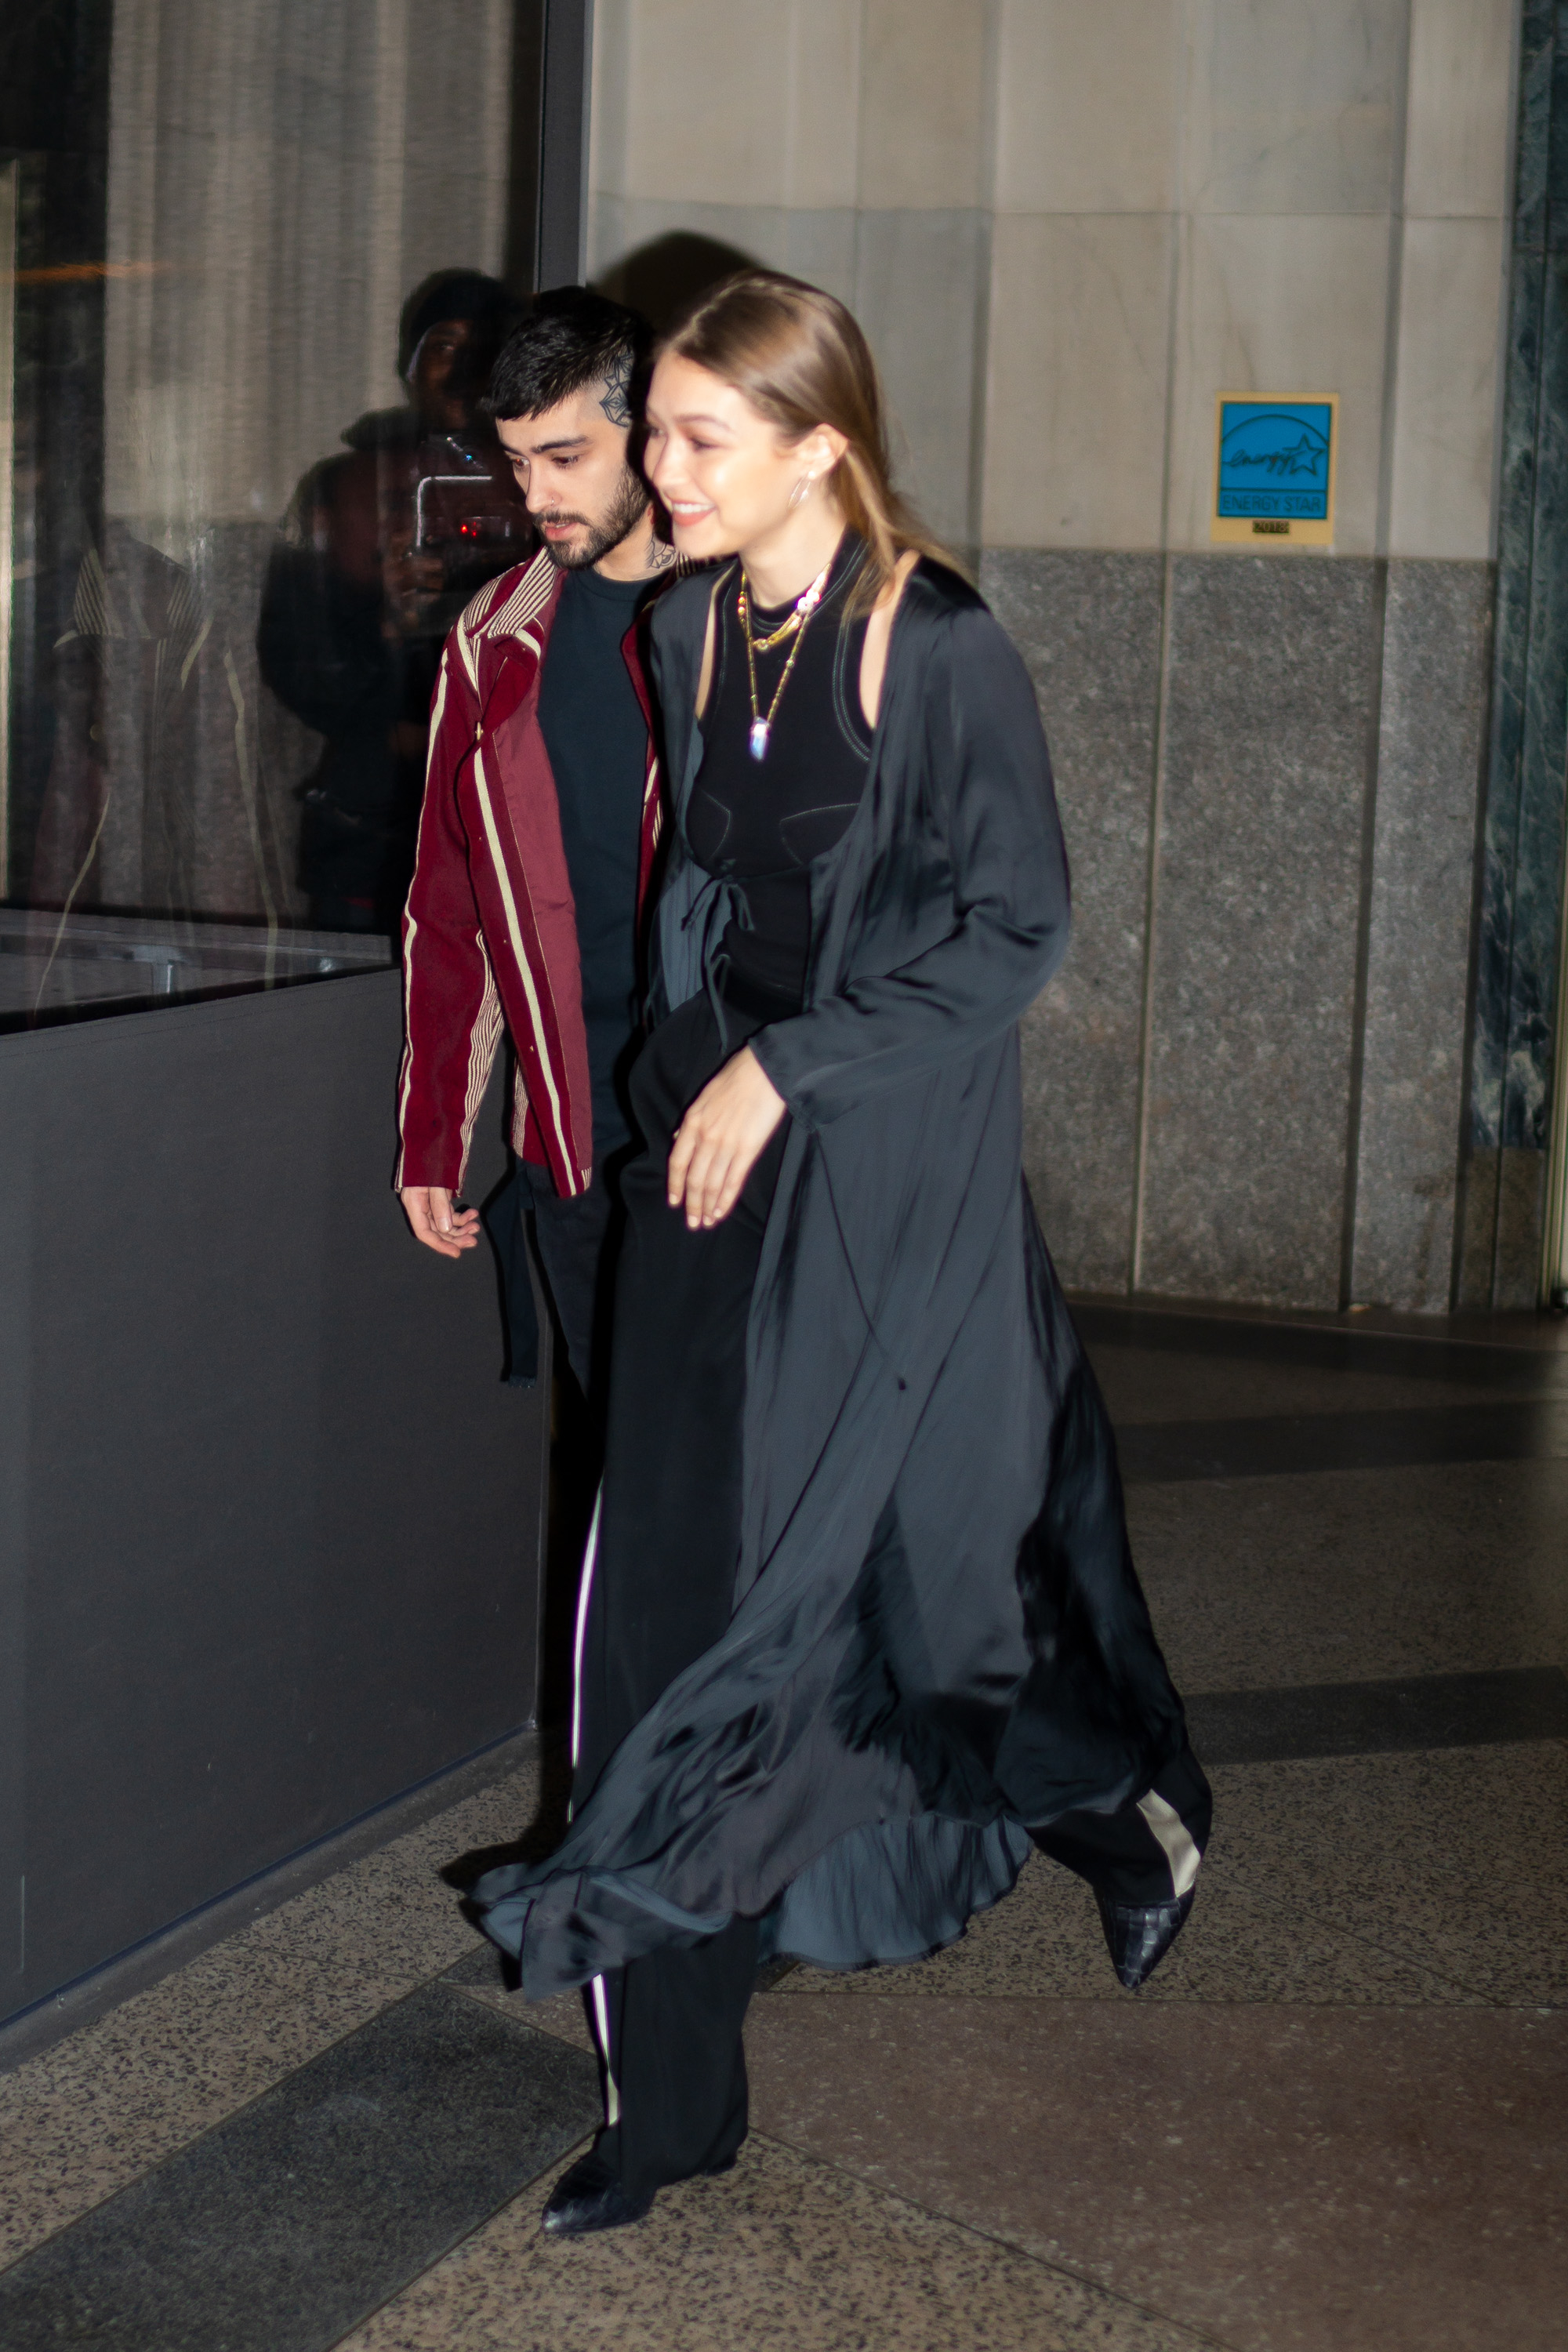 Zayn Malik and Gigi Hadid walking together